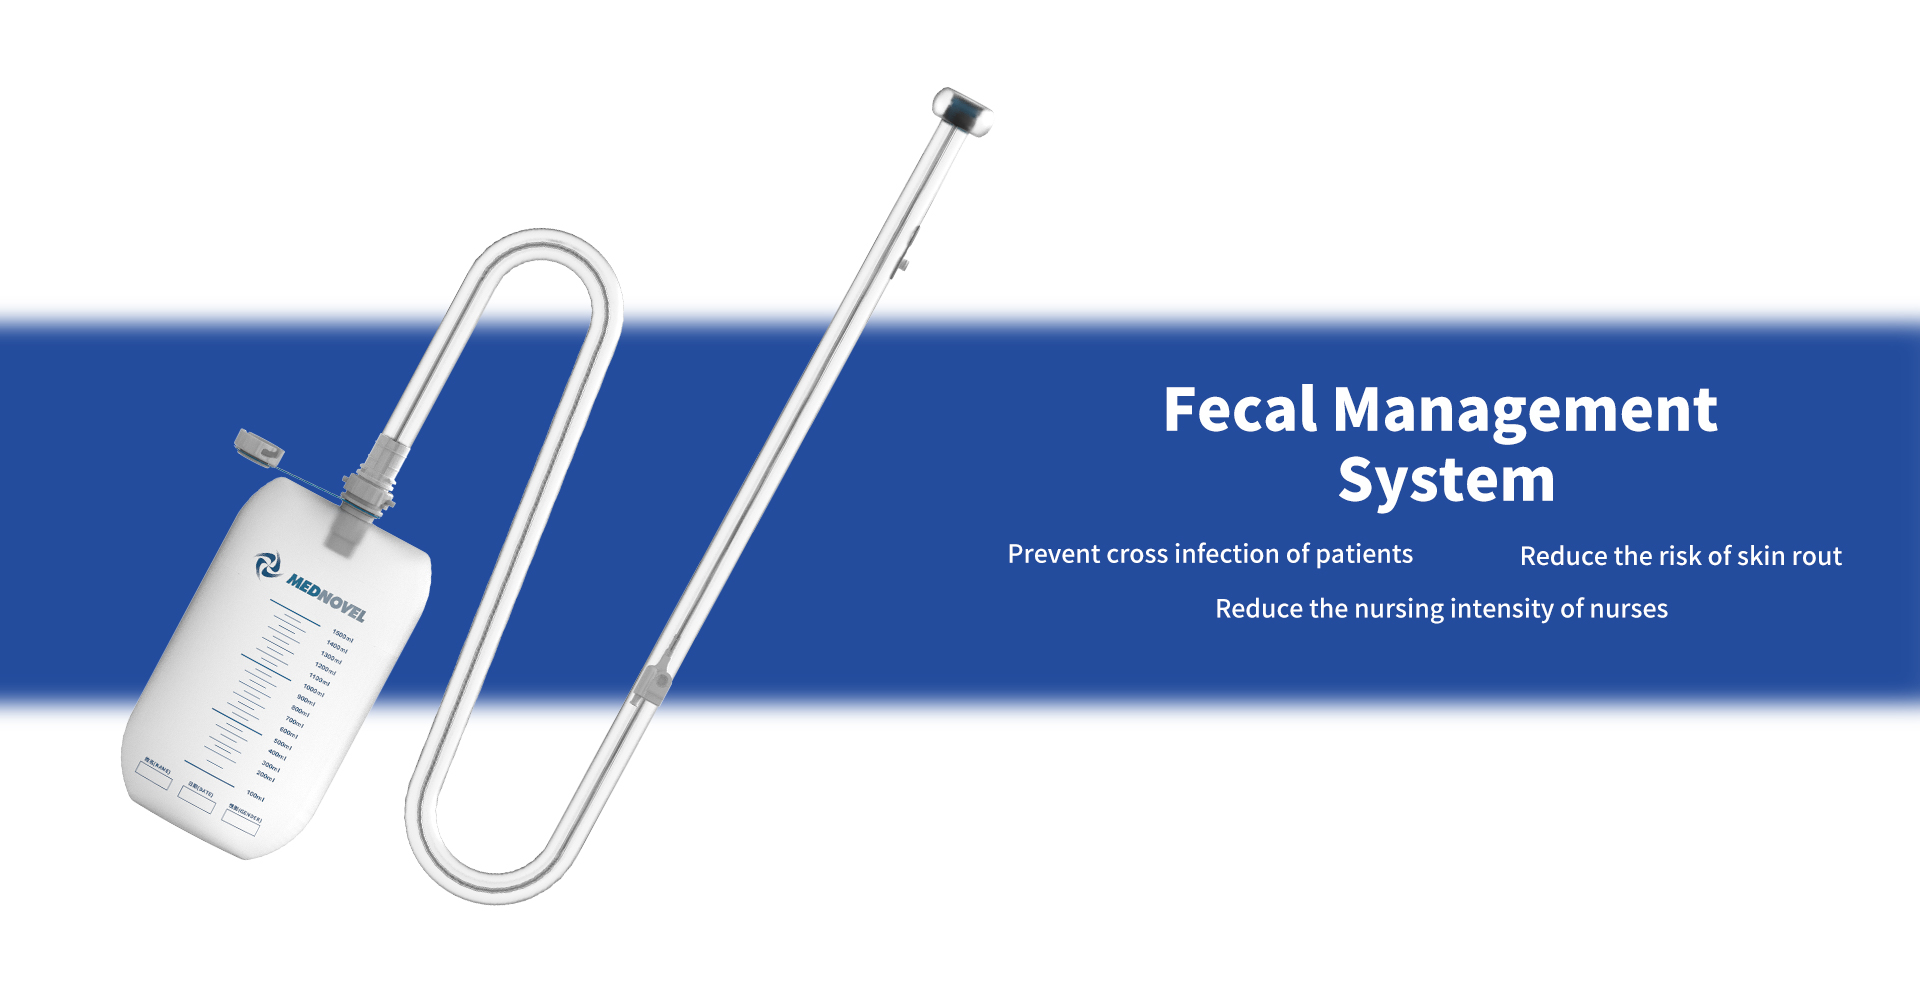 Fecal management system